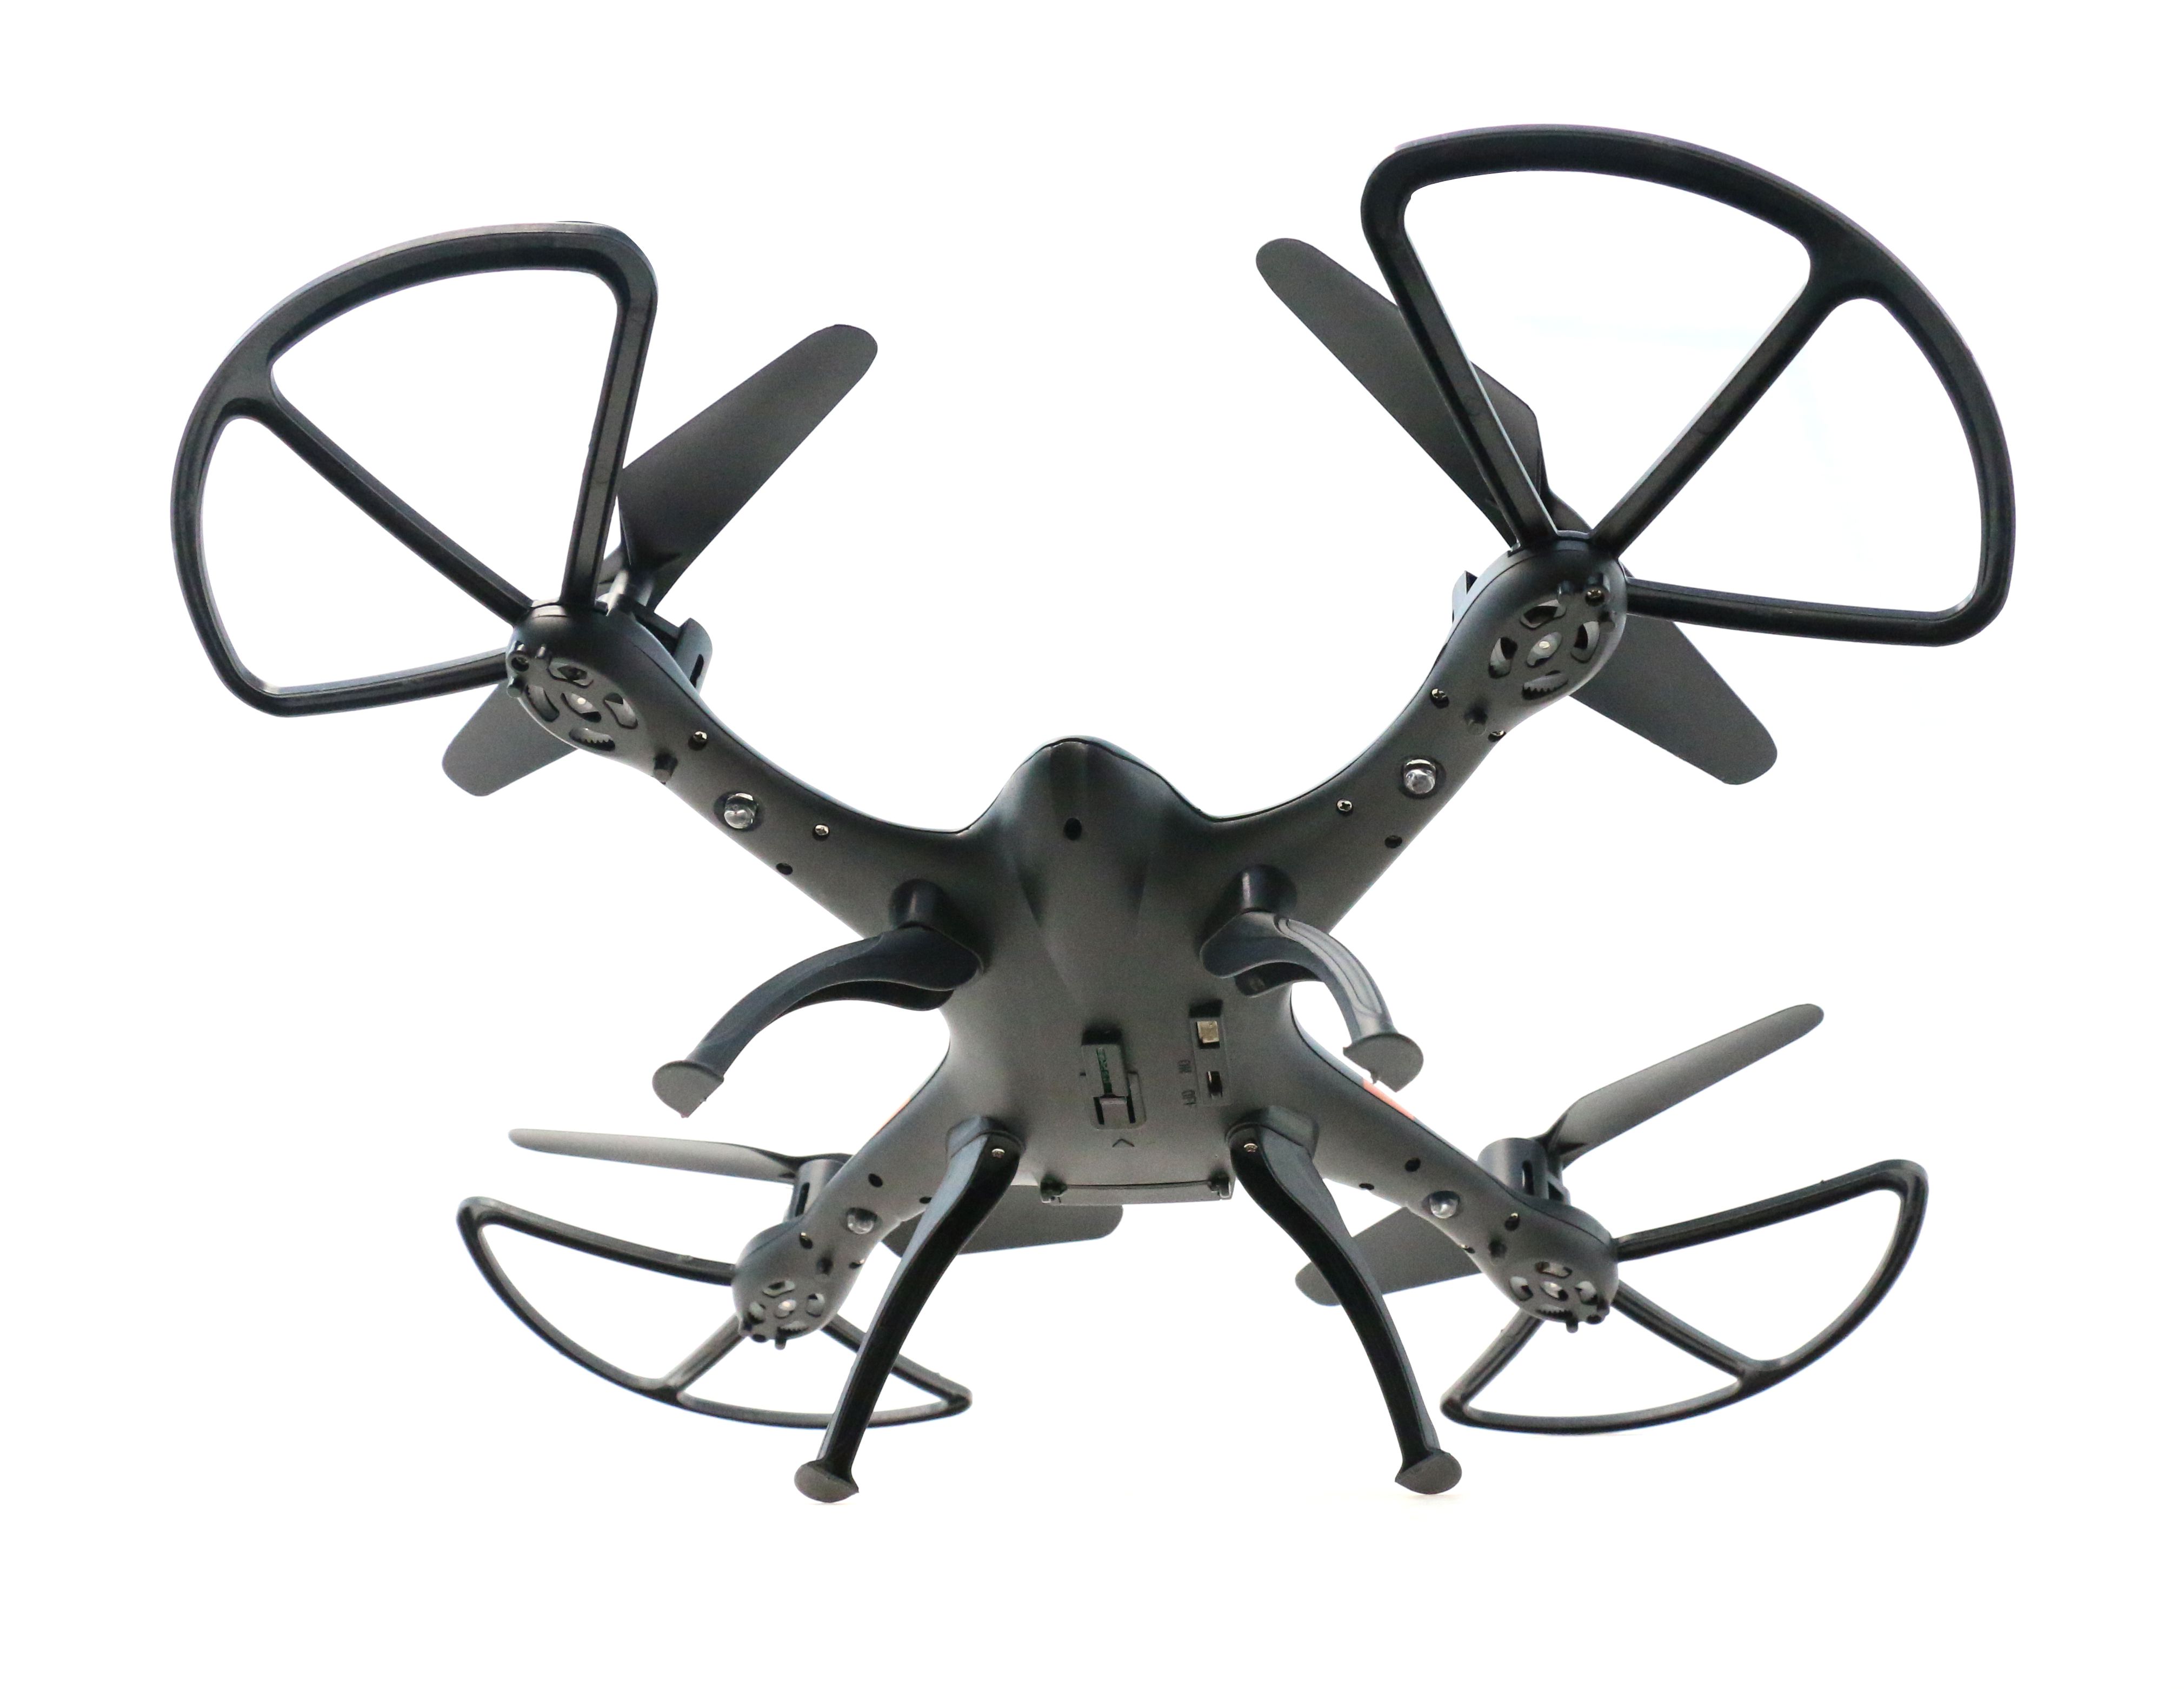  - X-Drone FPV   WiFi 720,   - )